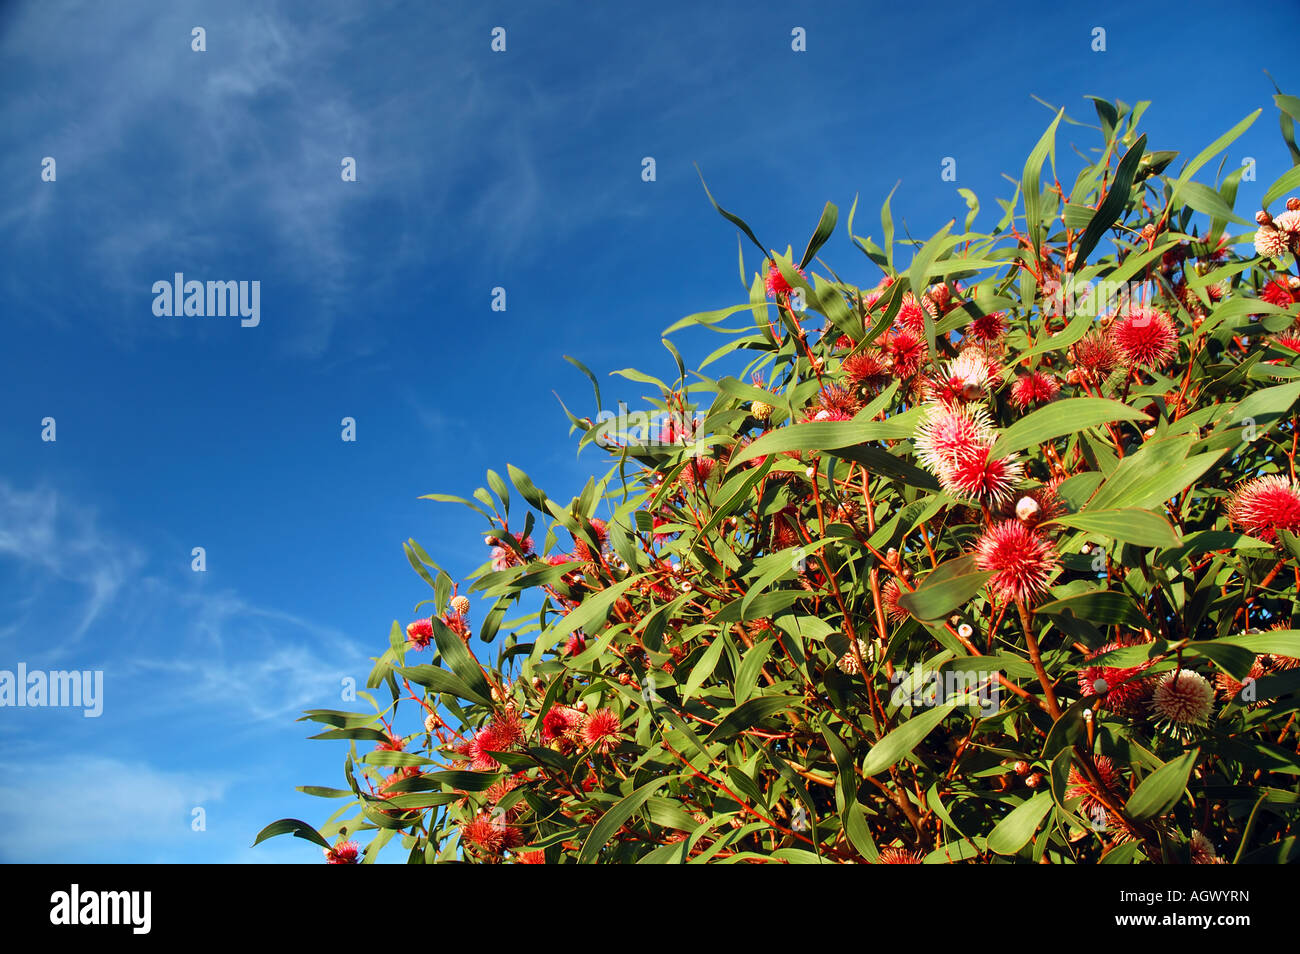 Flowering Pincushion Hakea Hakea laurina a tree native to small areas of Western Australia Stock Photo